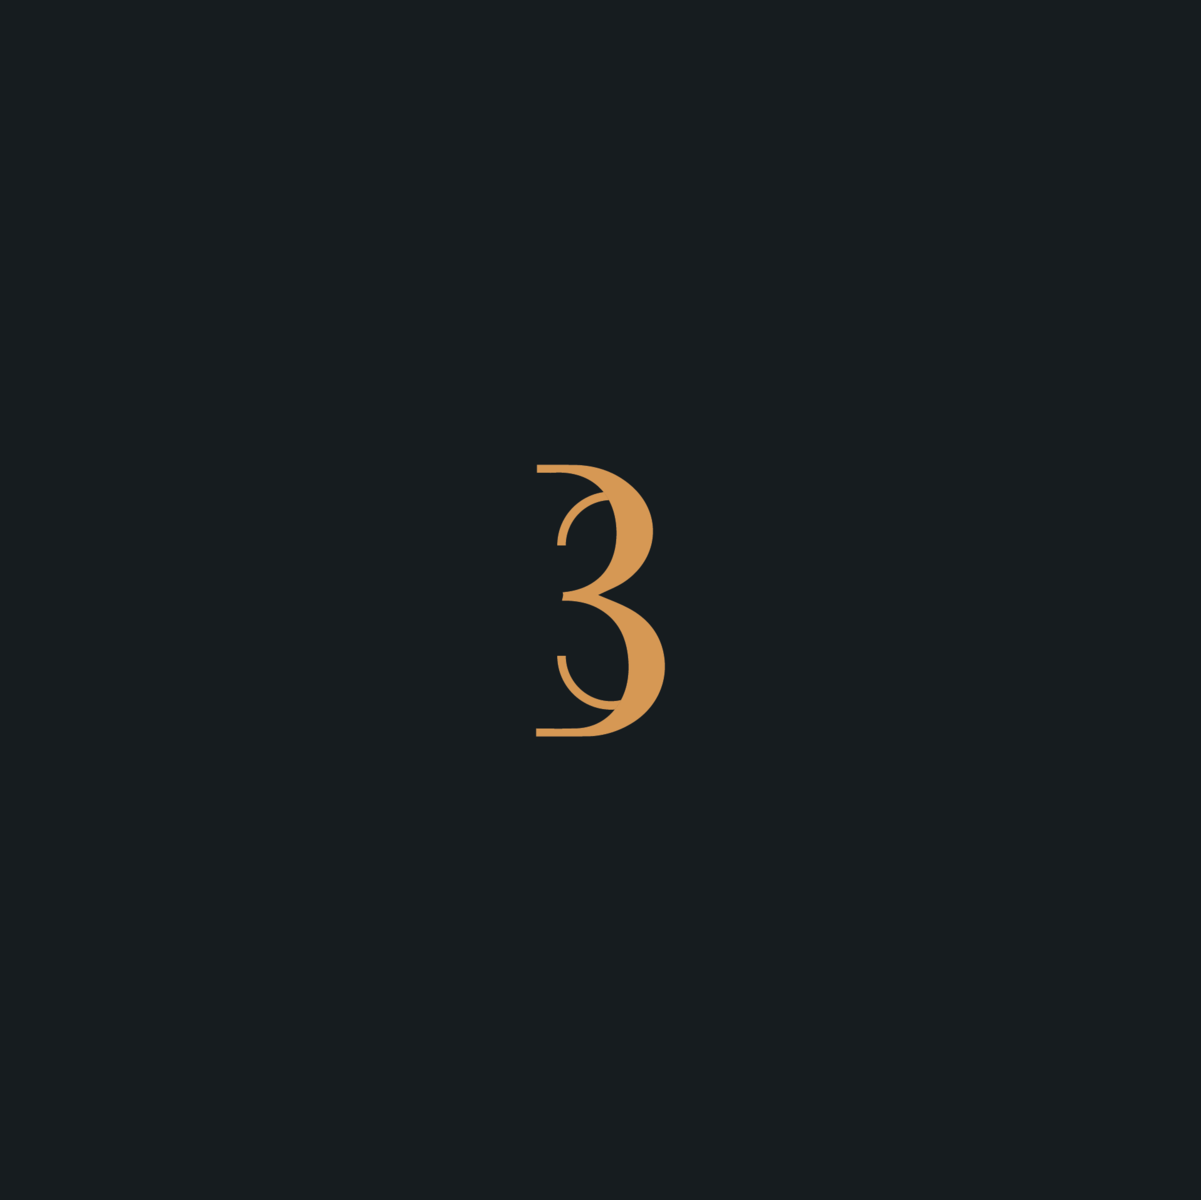 B3/3B logo by Akio Design on Dribbble